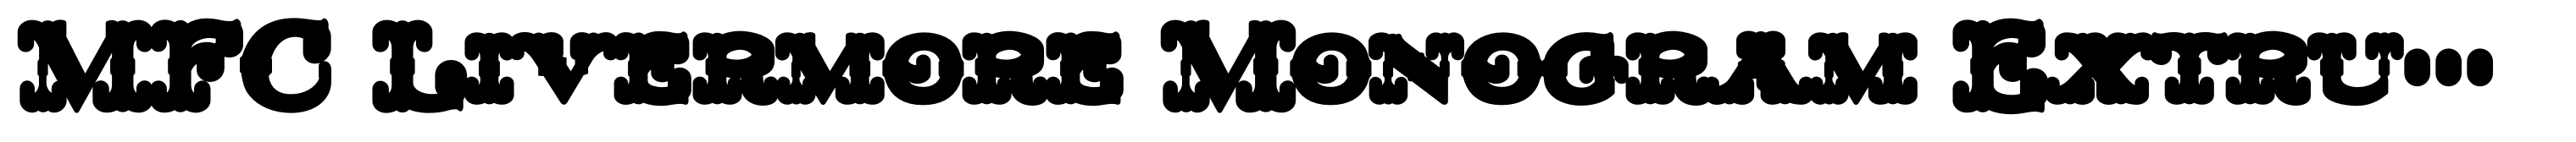 MFC Livermore Monogram Extruded